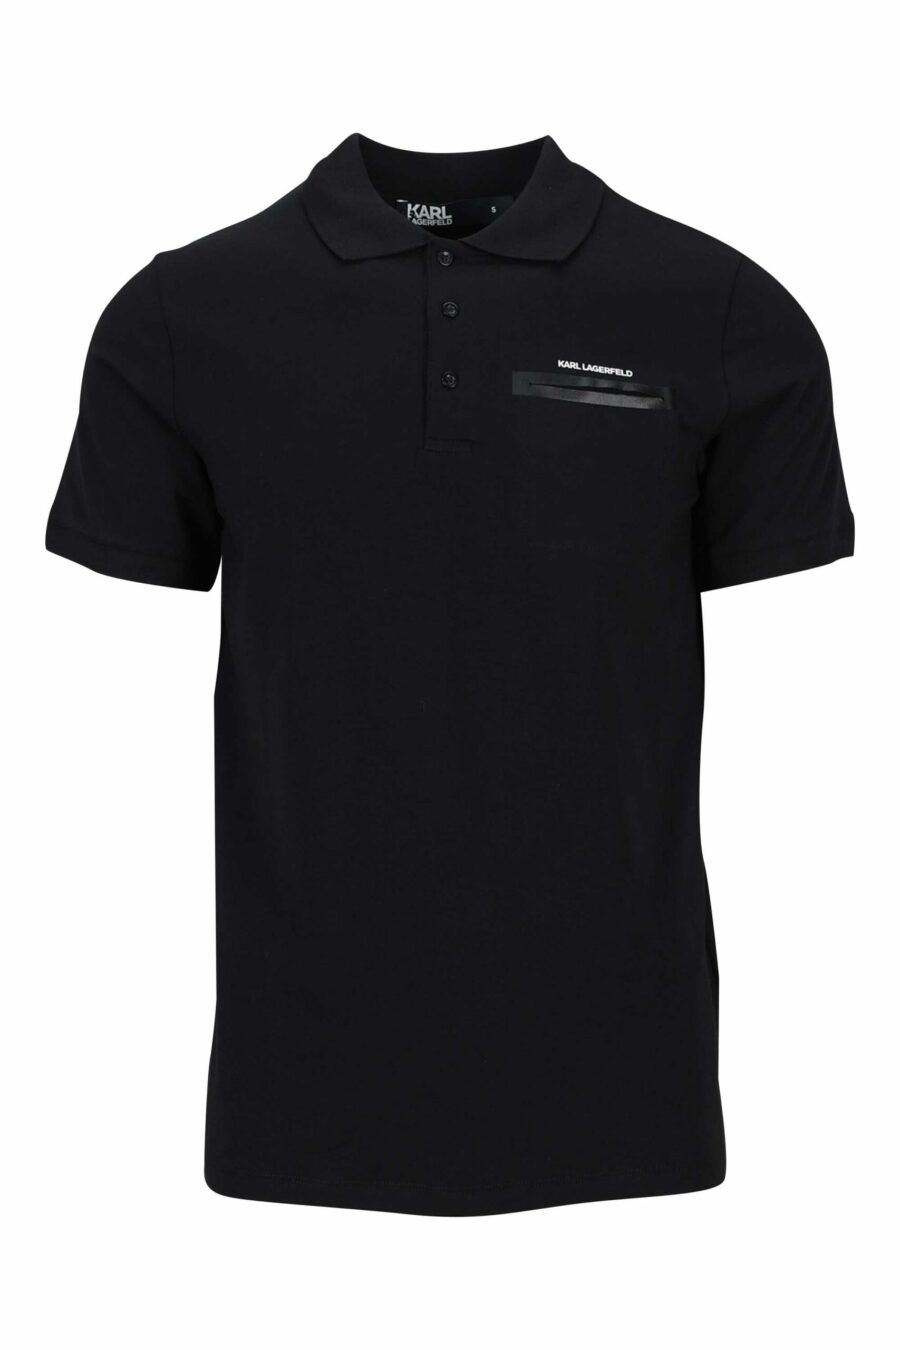 Black polo shirt with black glossy logo - 4062226664301 1 scaled